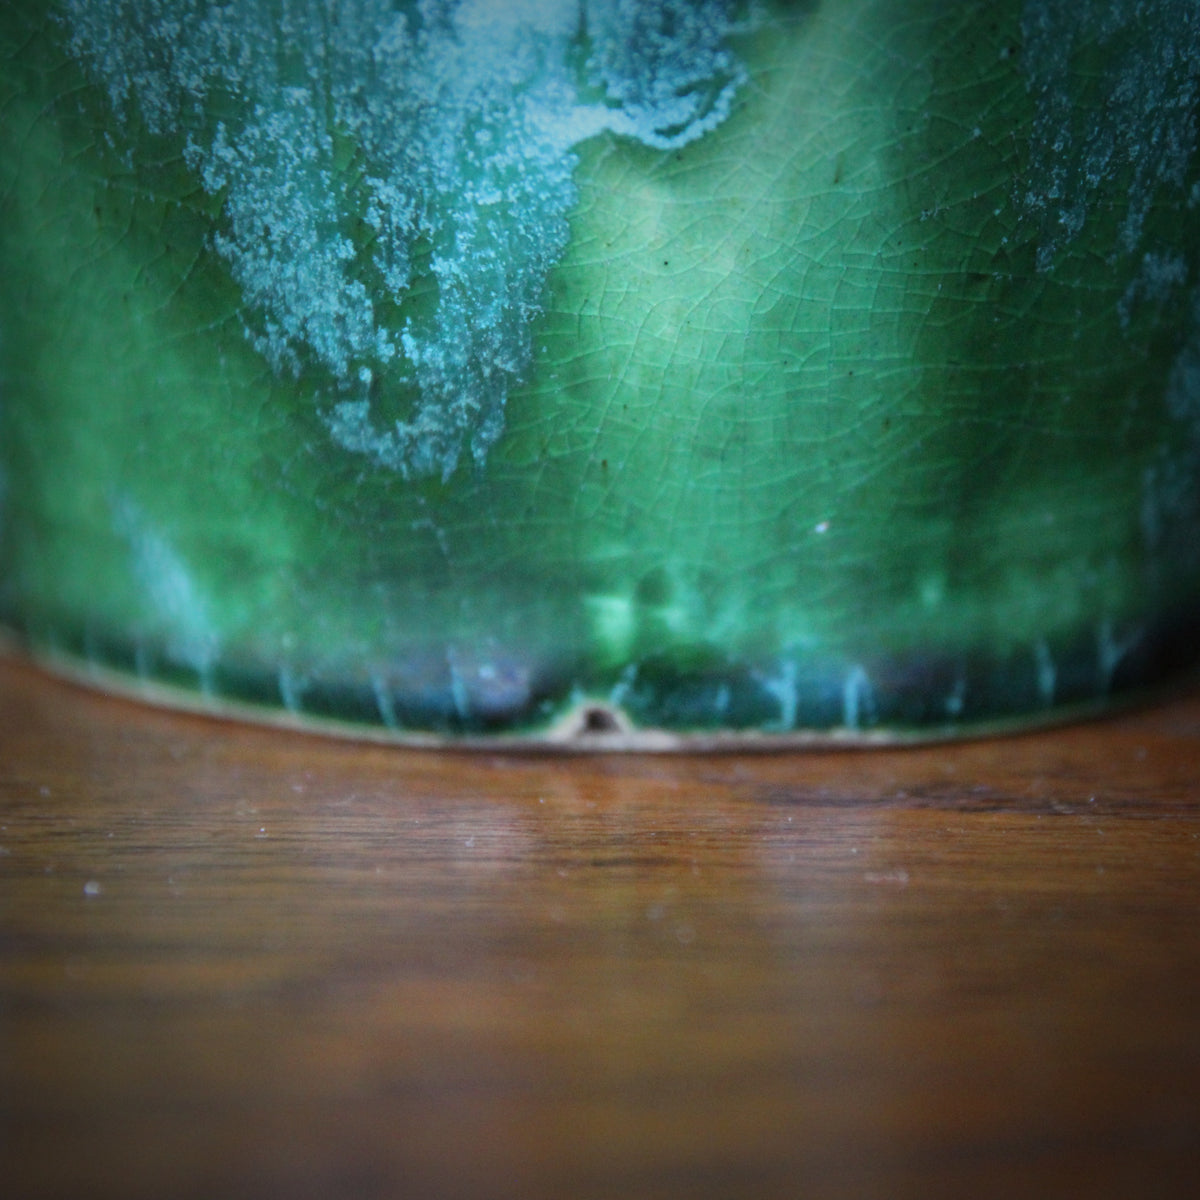 Green & Turquoise "Onyx" Vase